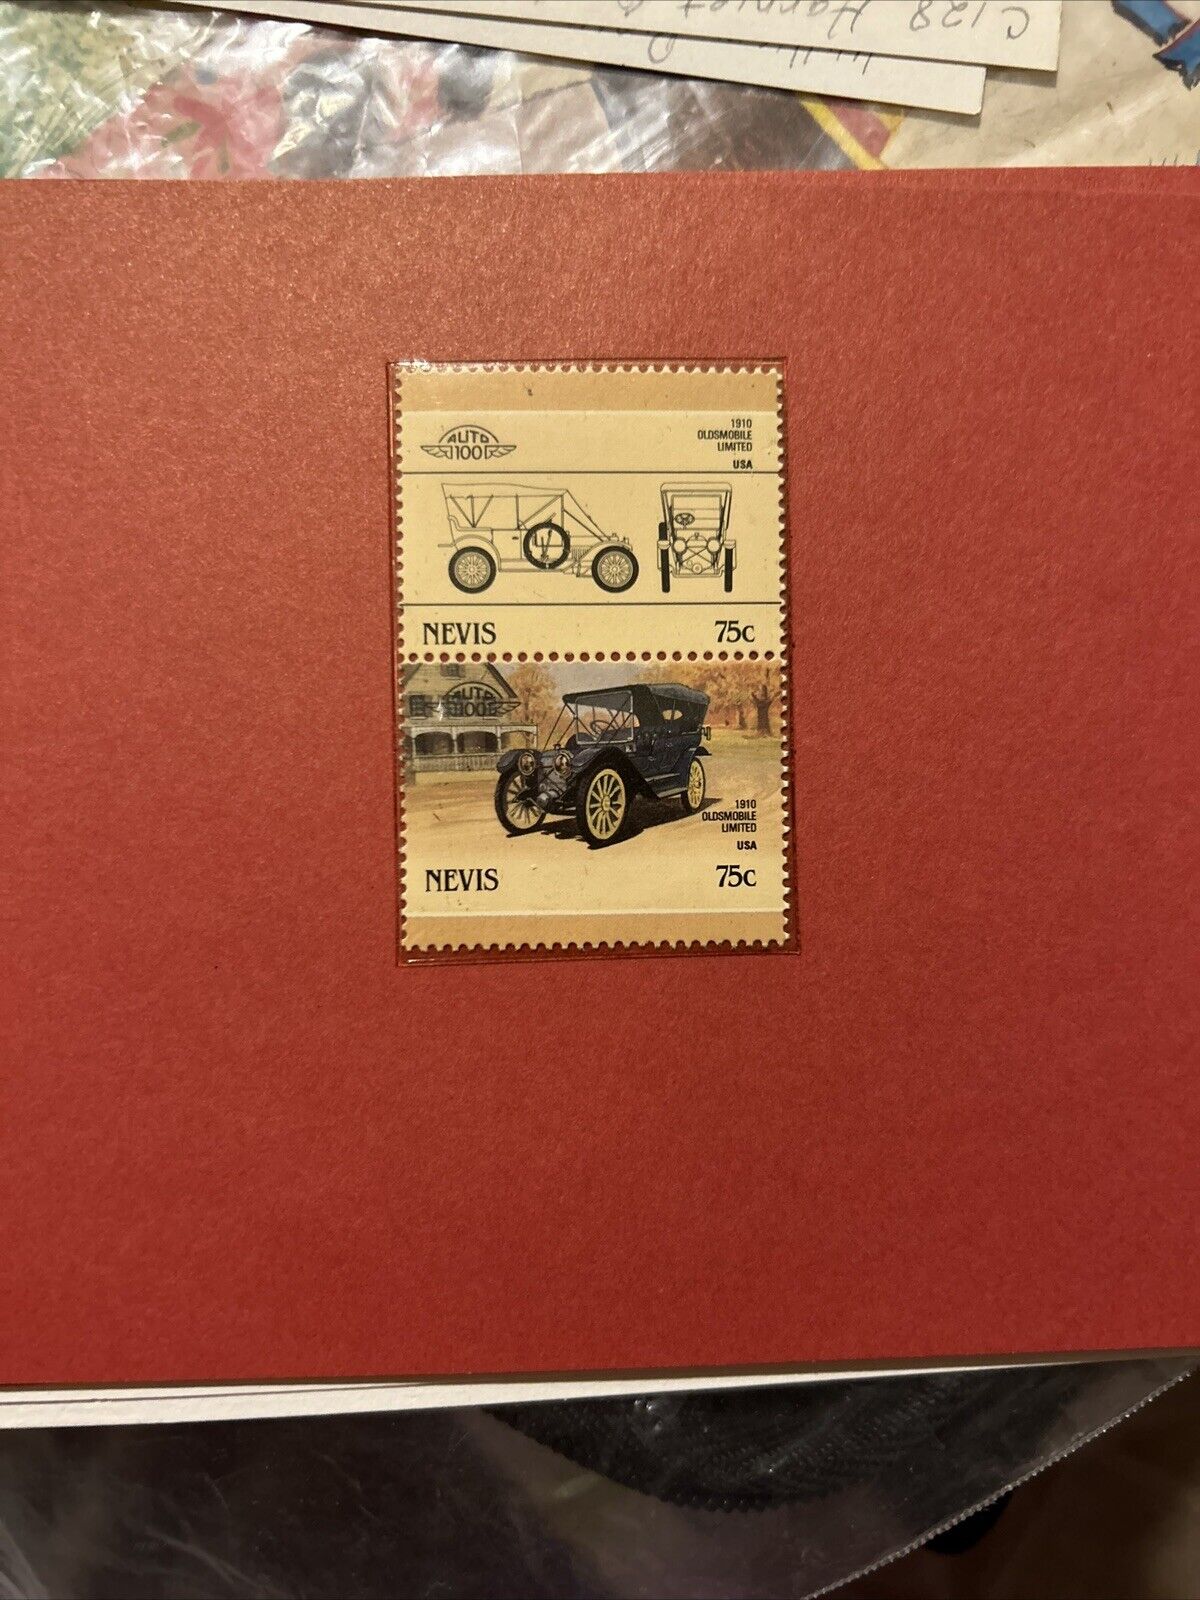 1910 Auto Look Nevis Stamp